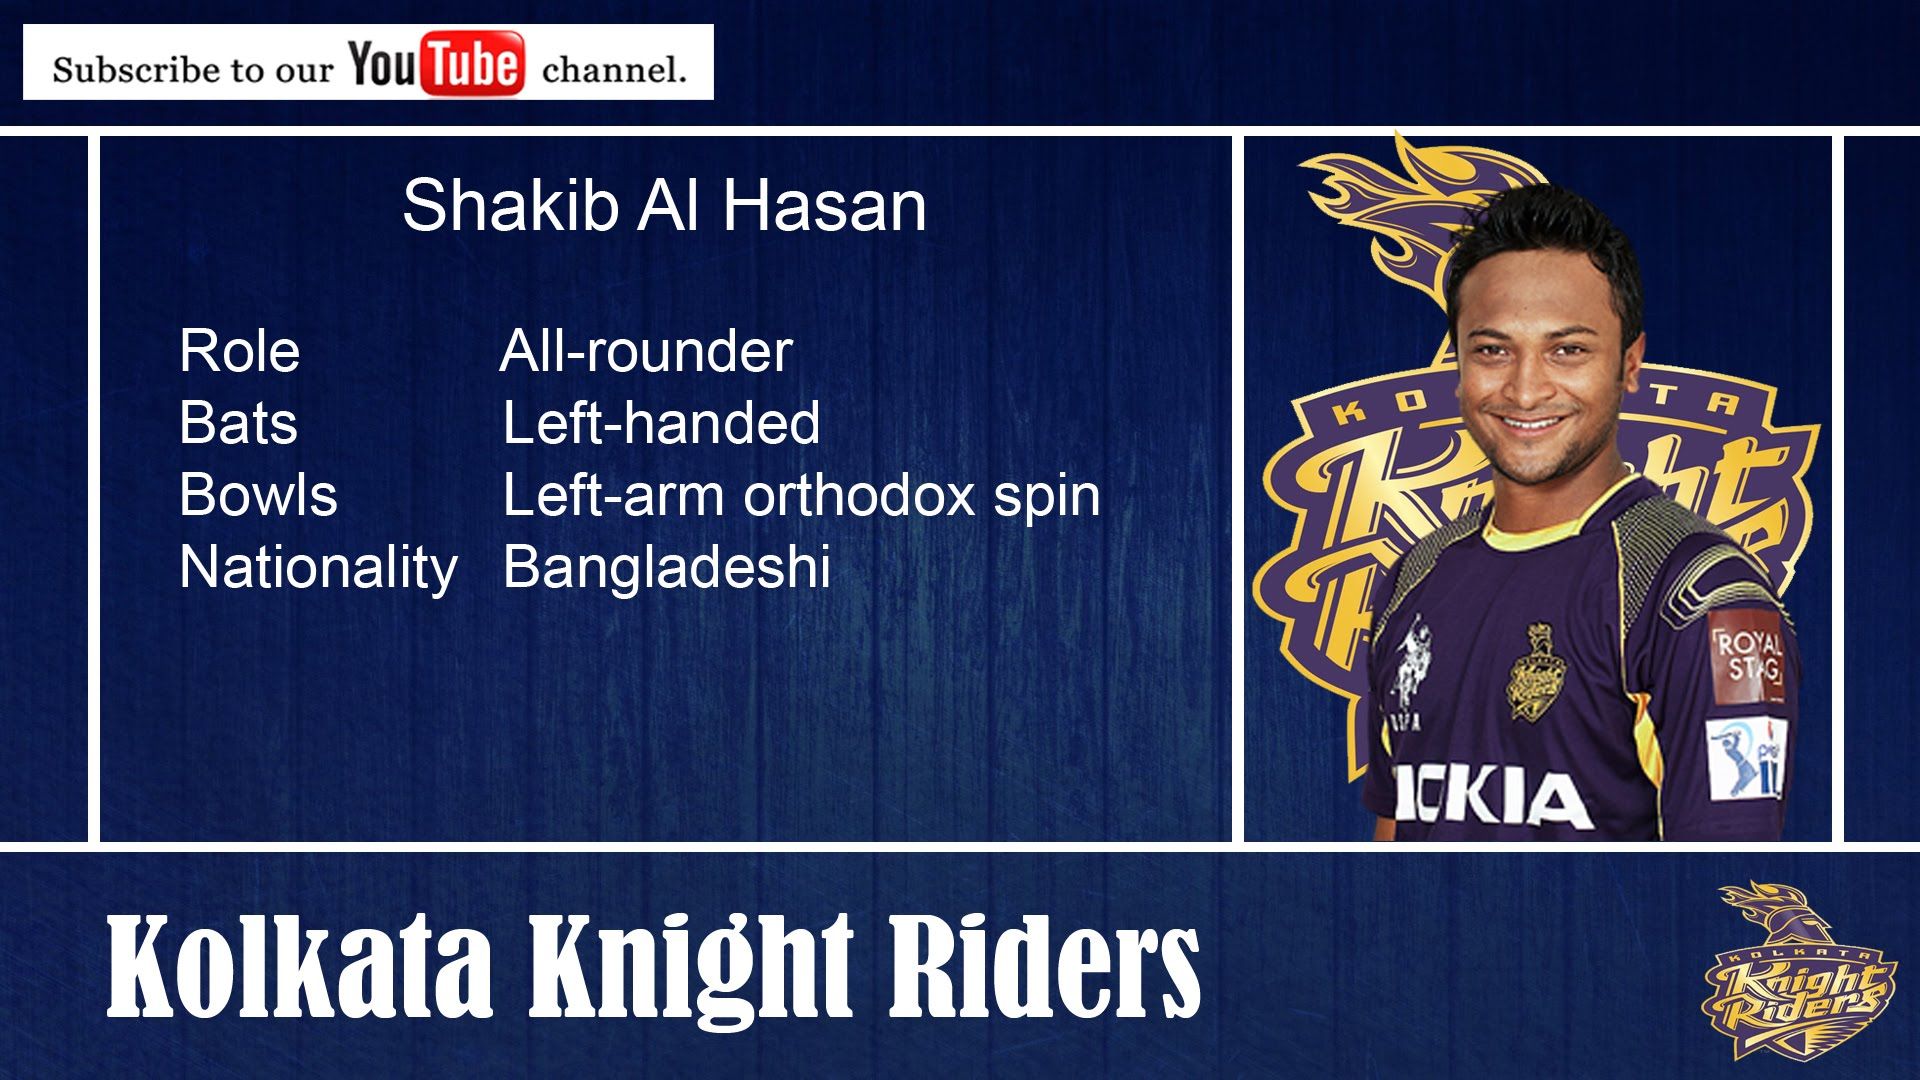 Kkr - Kolkata Knight Riders , HD Wallpaper & Backgrounds